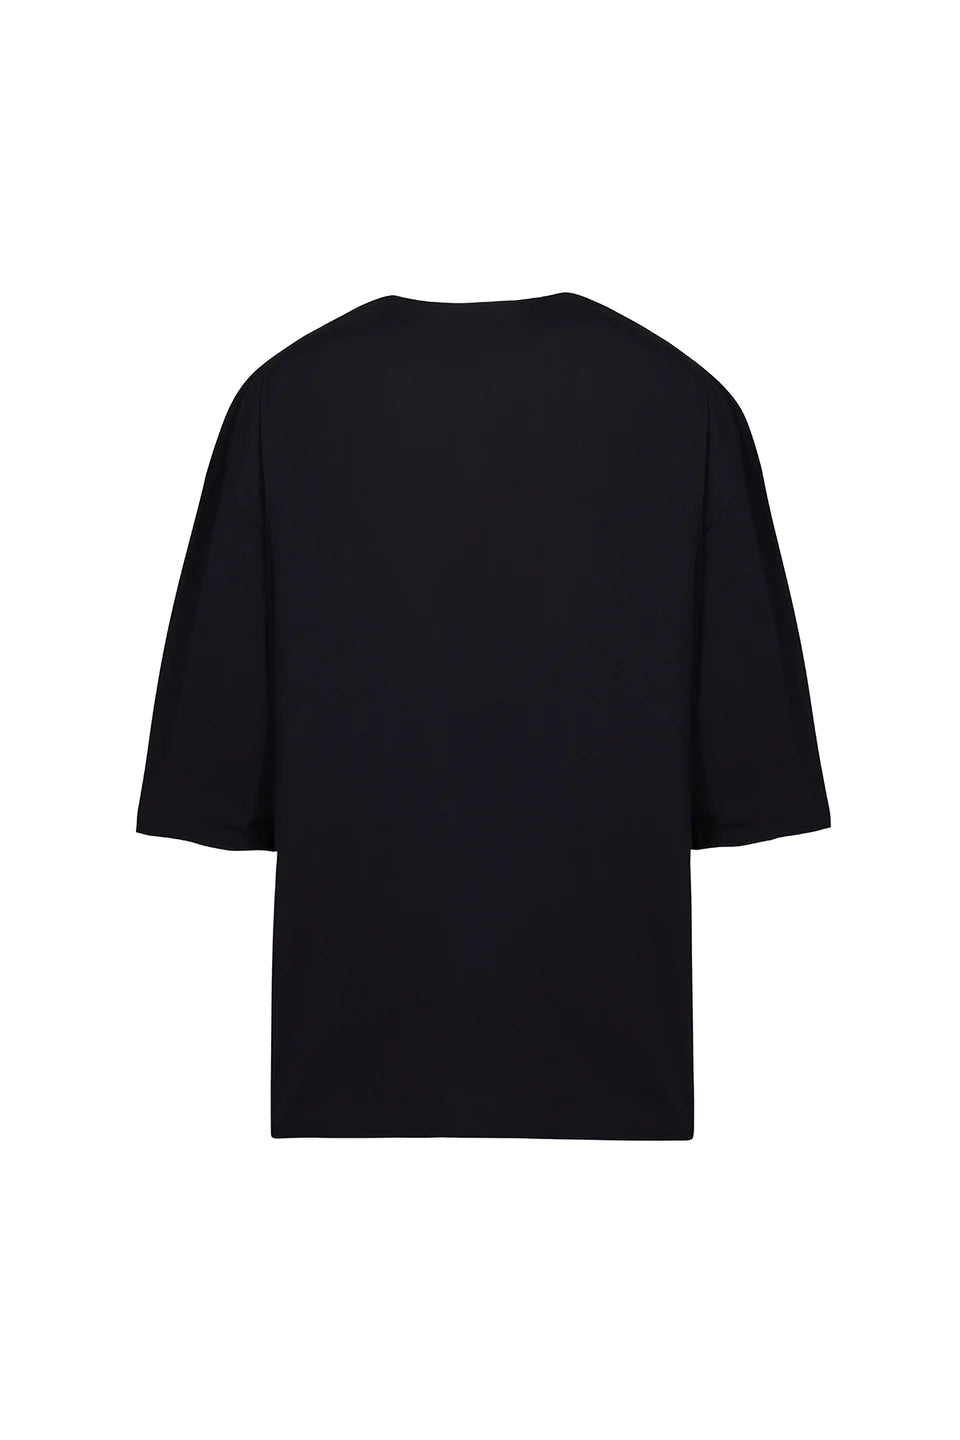 V Neck Black T-Shirt: Cotton